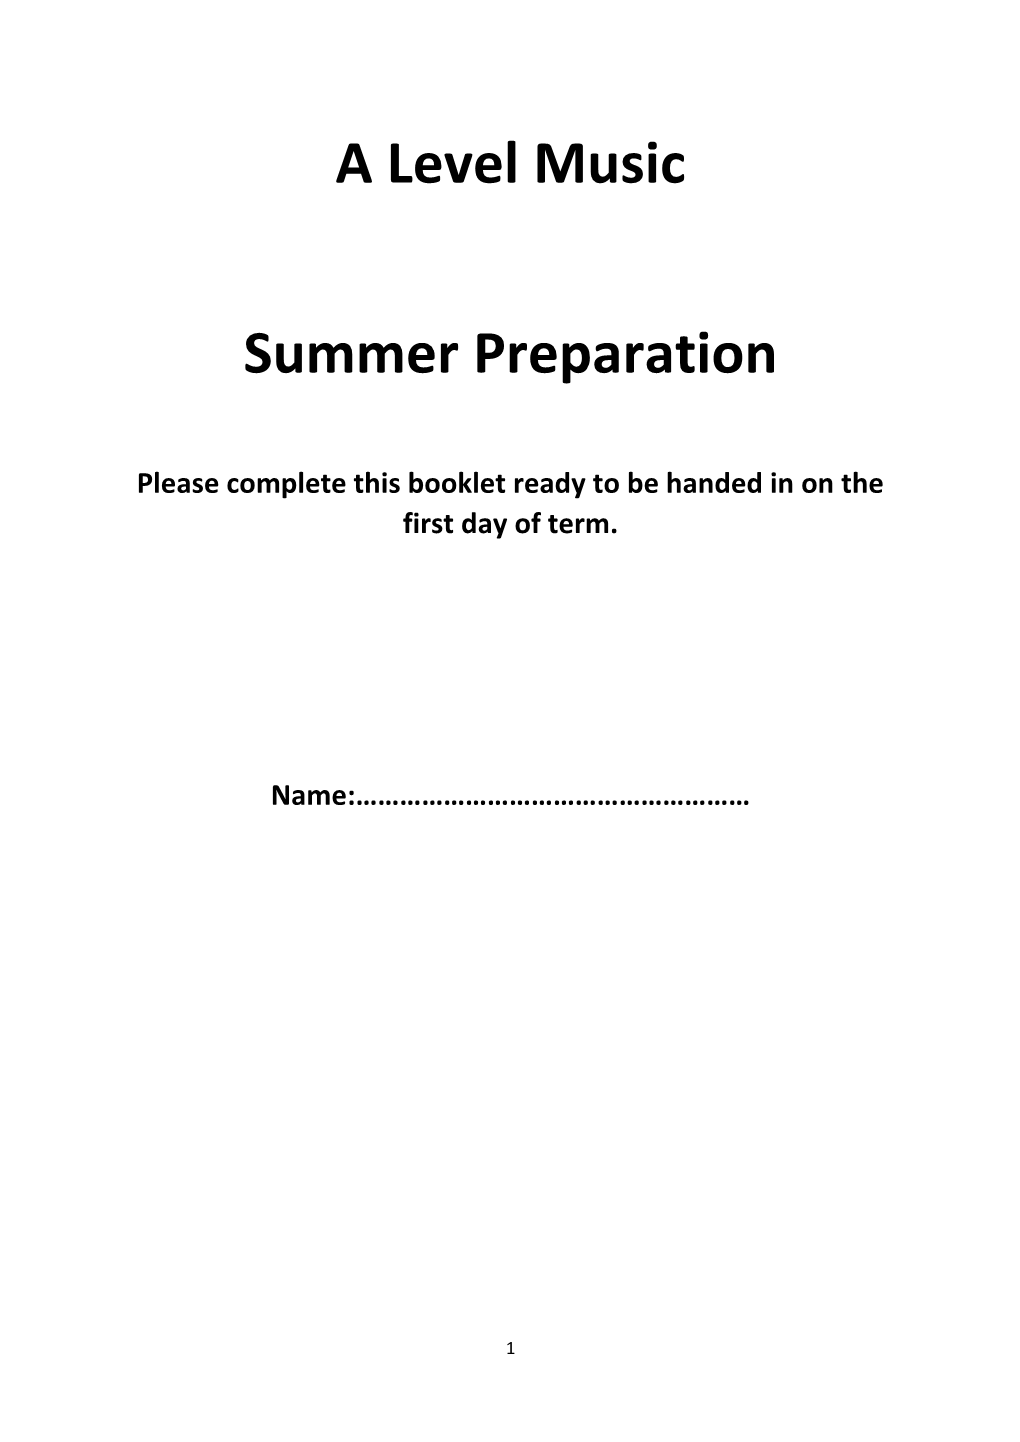 A Level Music Summer Preparation